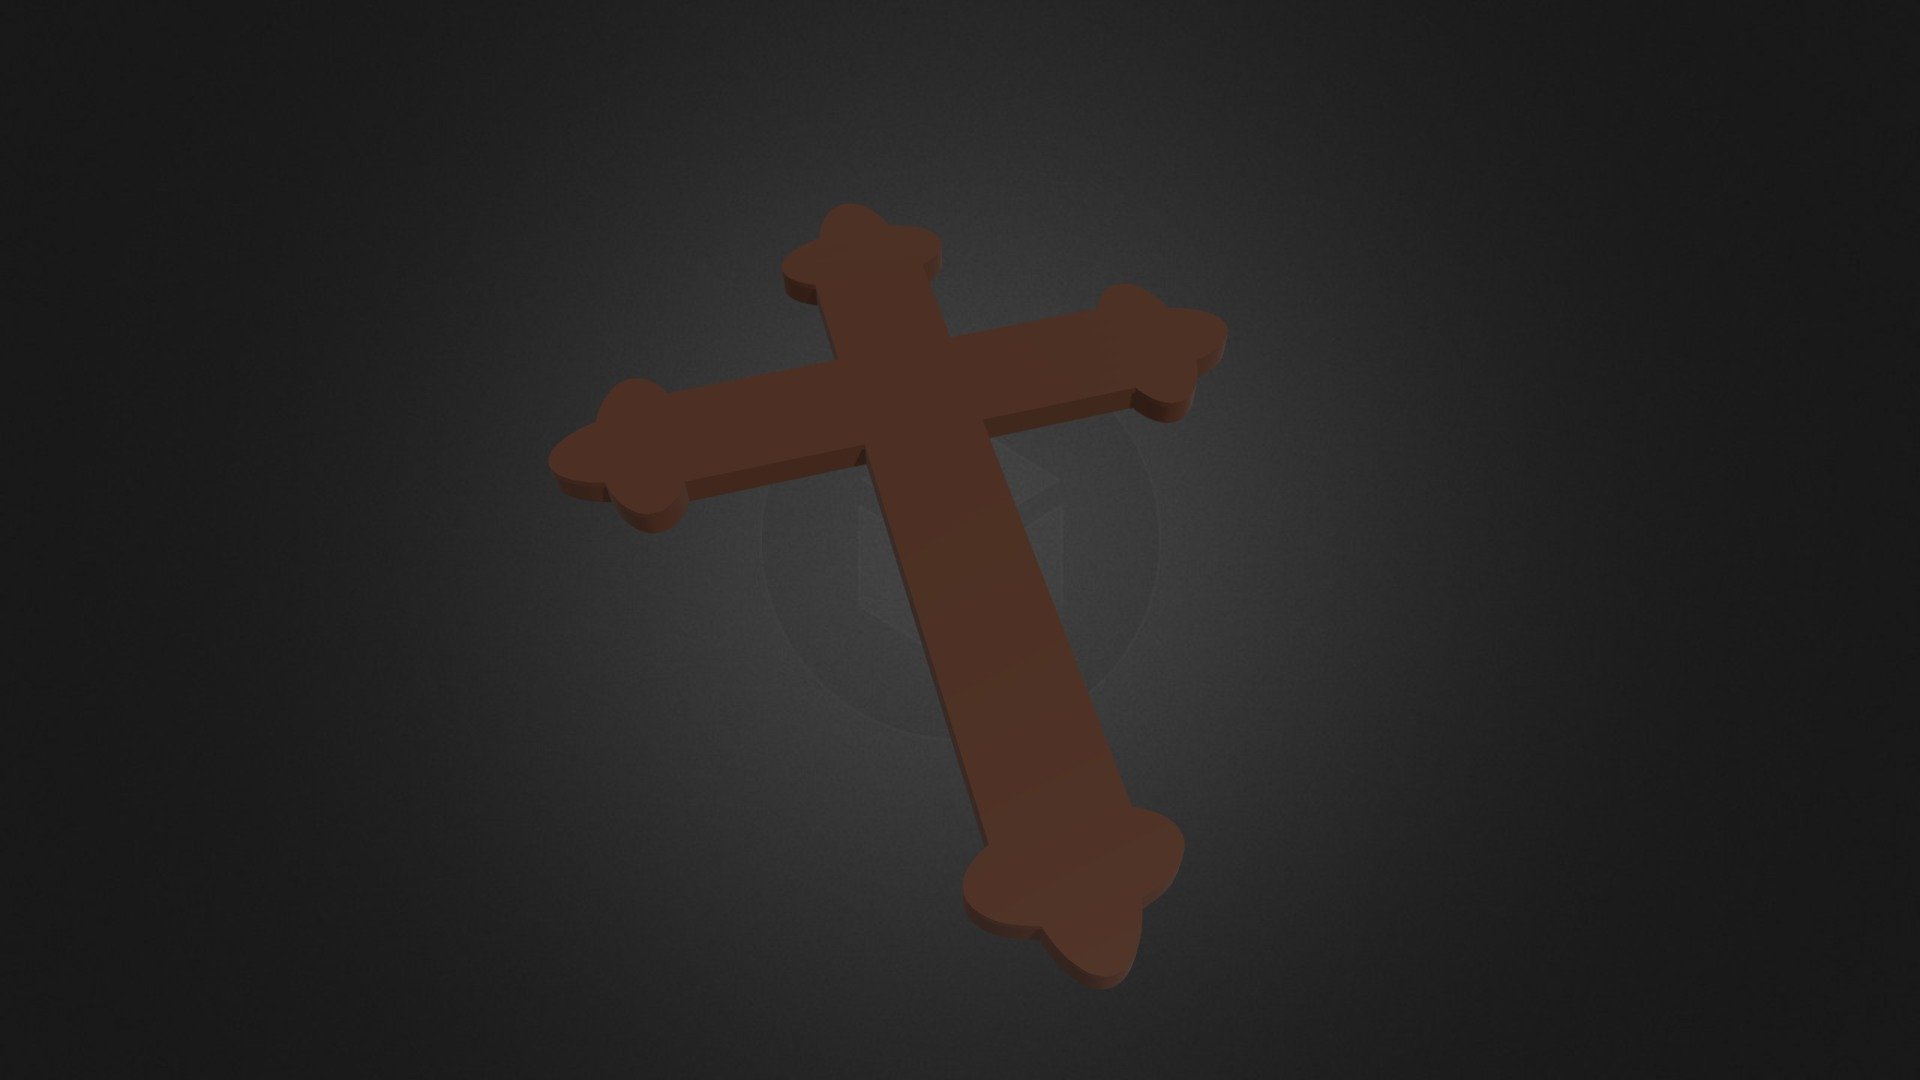 Crucifix [Doors / RoBlox] - 3D Printed, 6 Long; black